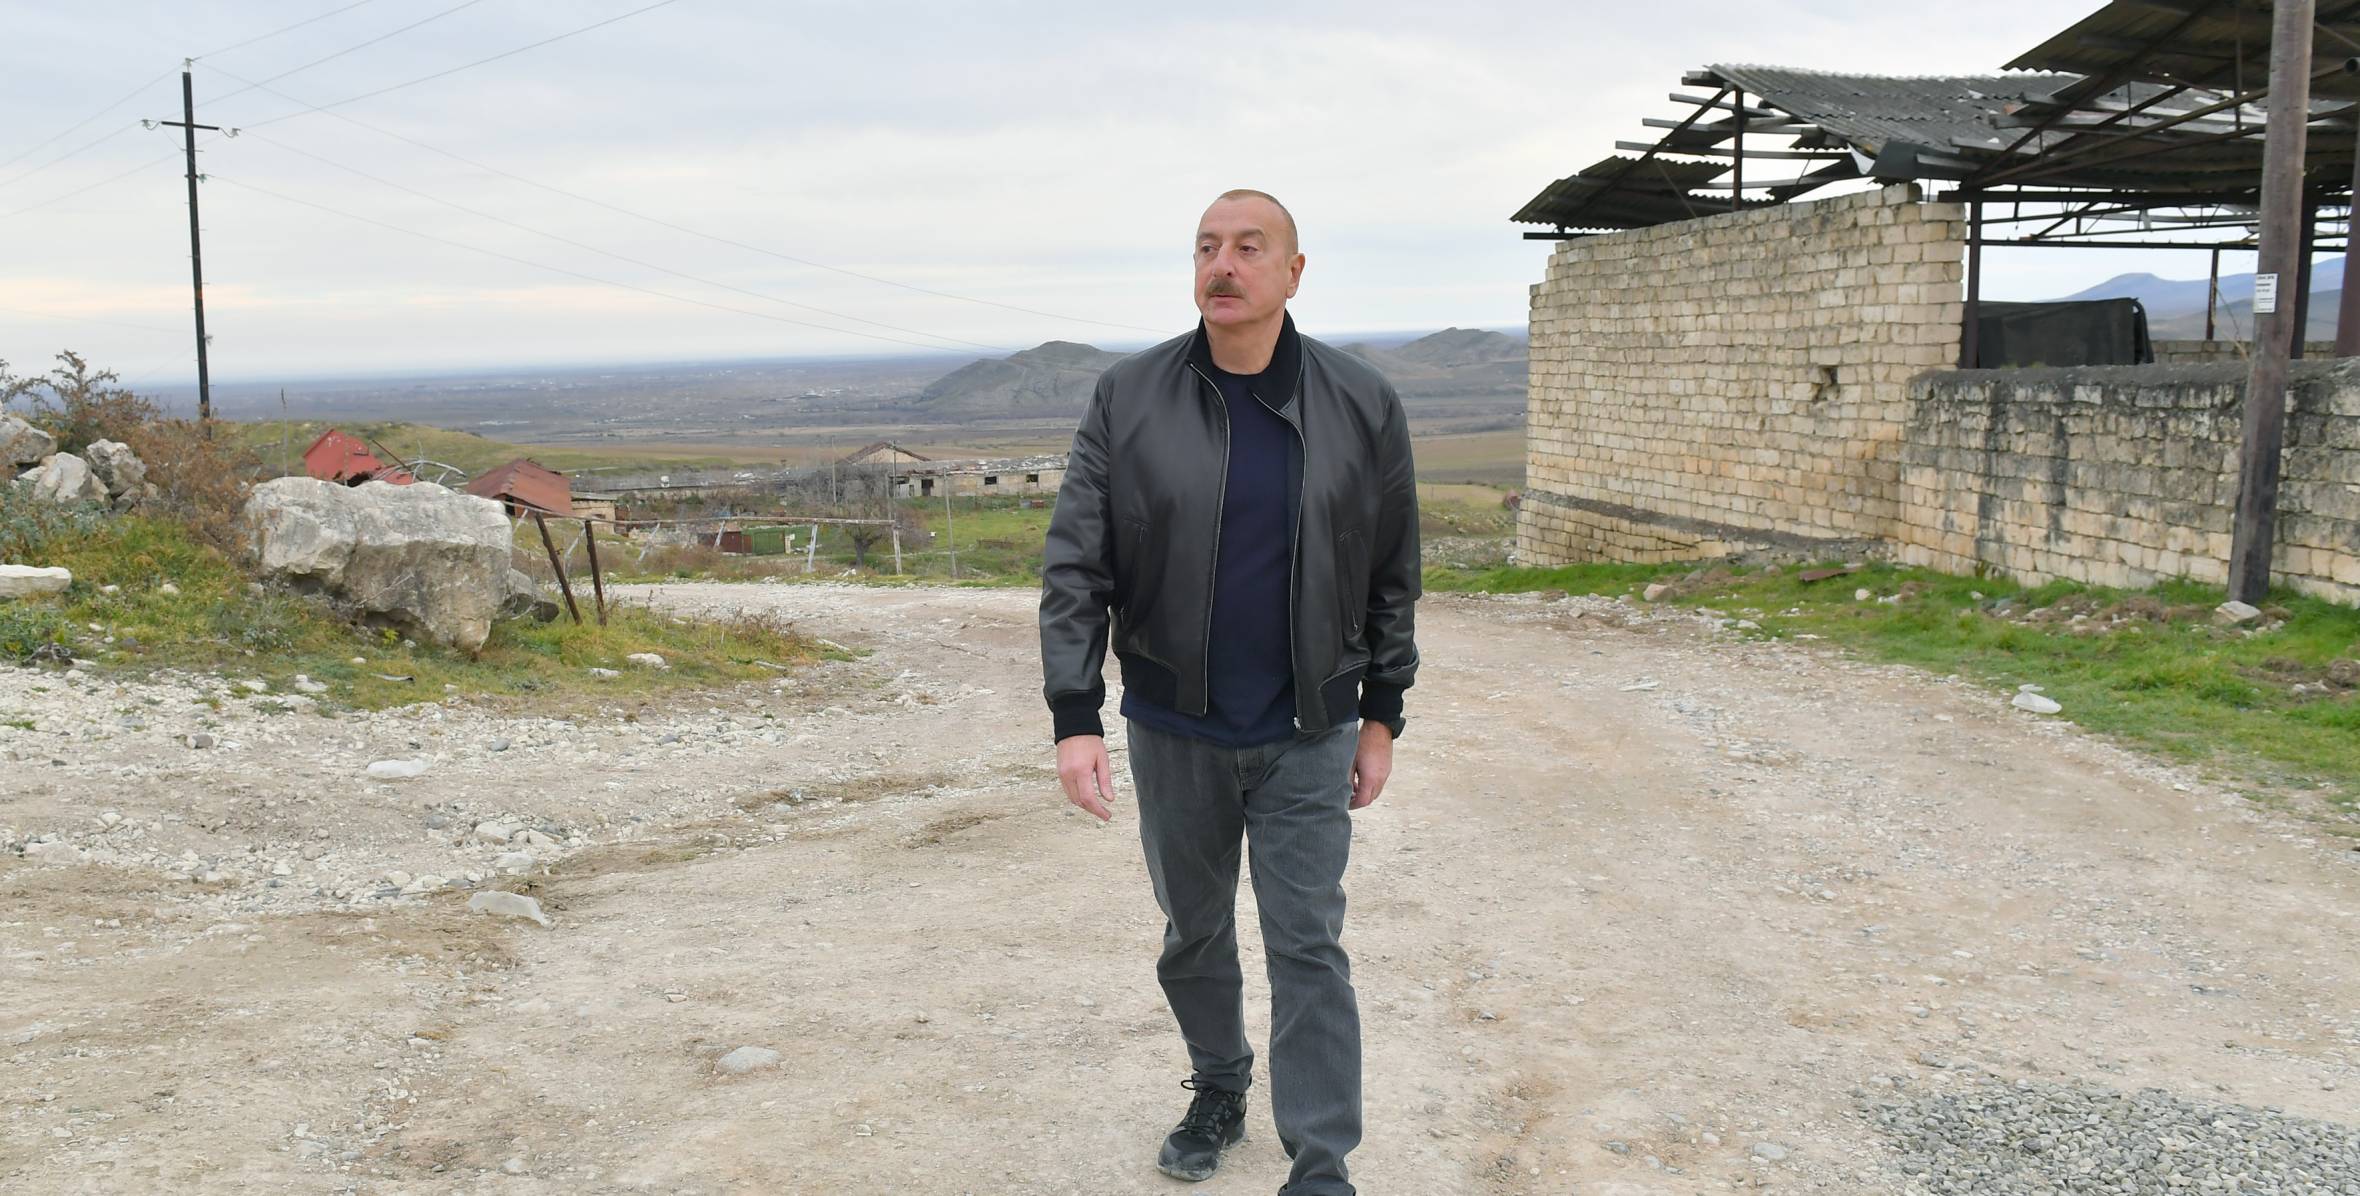 Ilham Aliyev visited village of Khanabad in Khojaly district